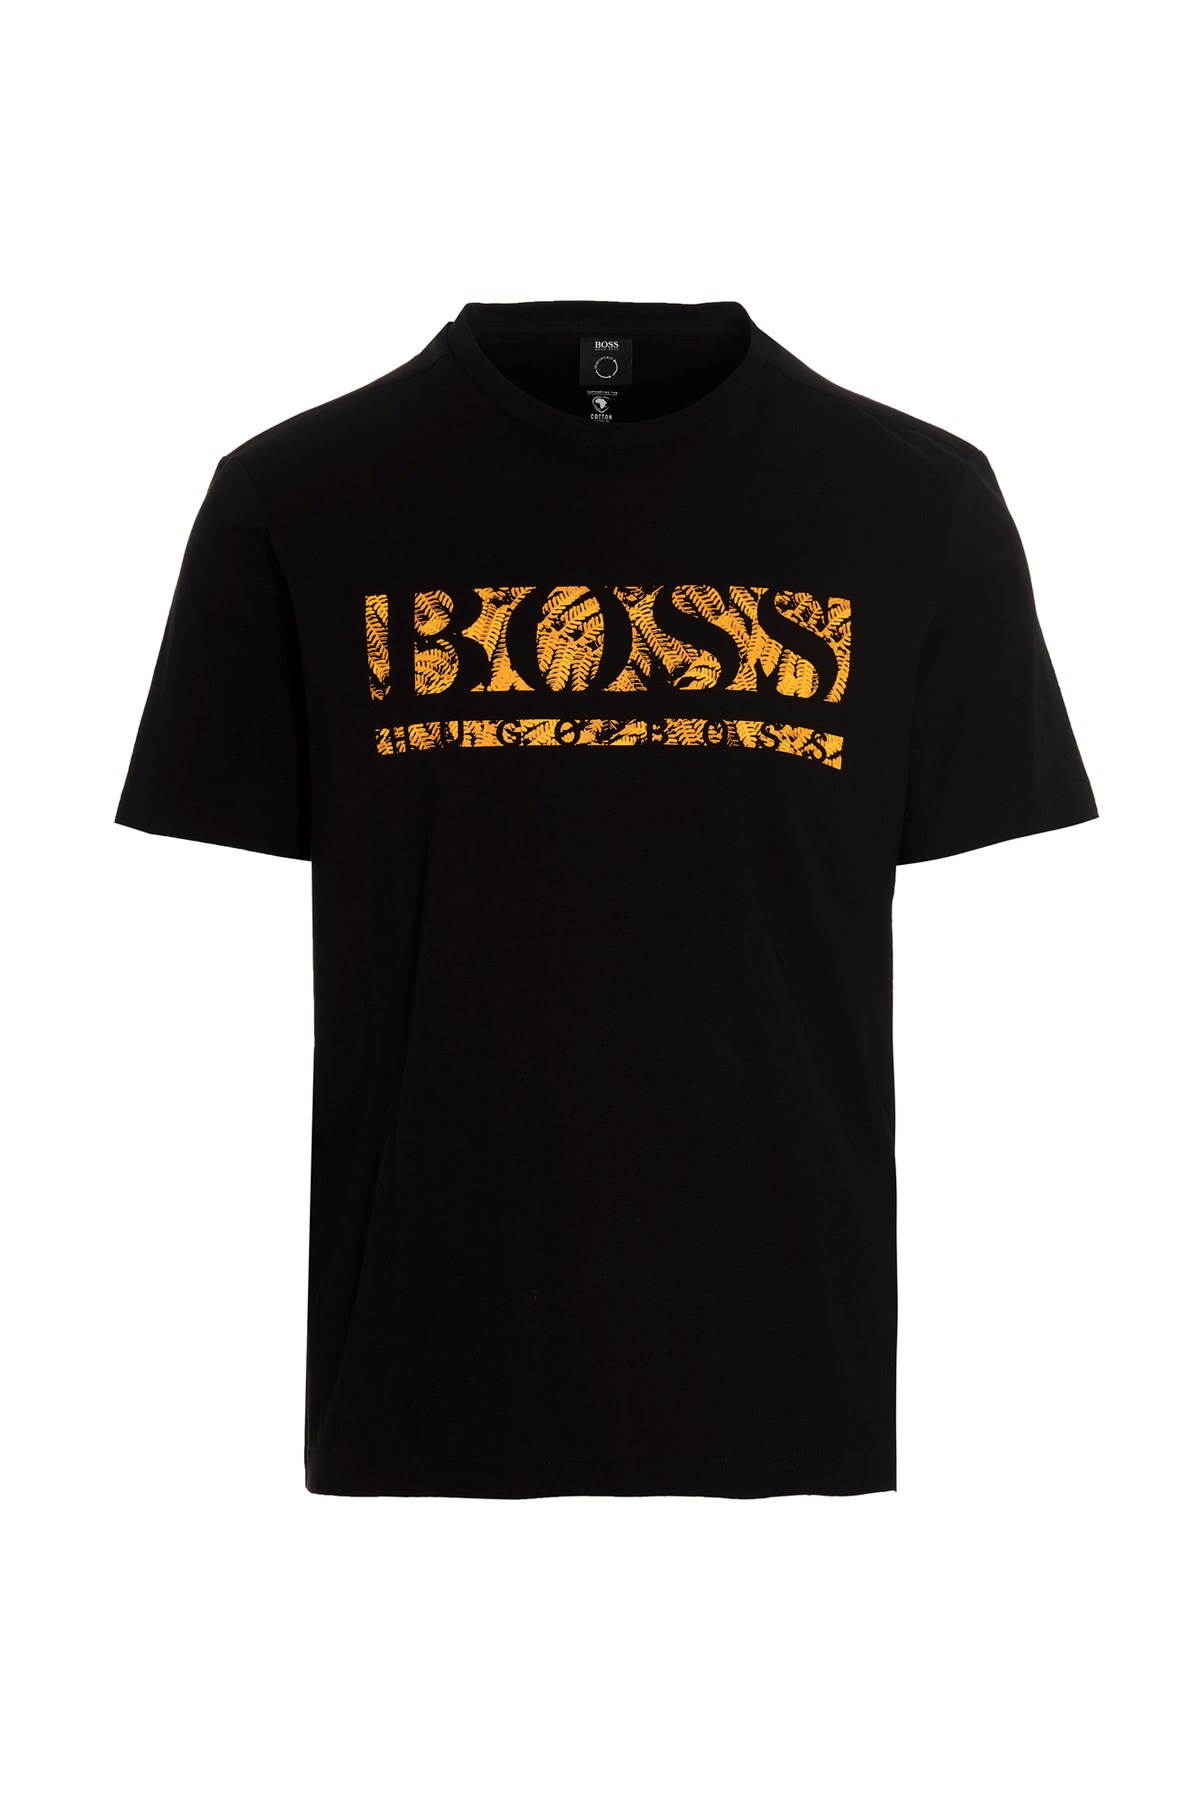 HUGO BOSS Logo T-Shirt